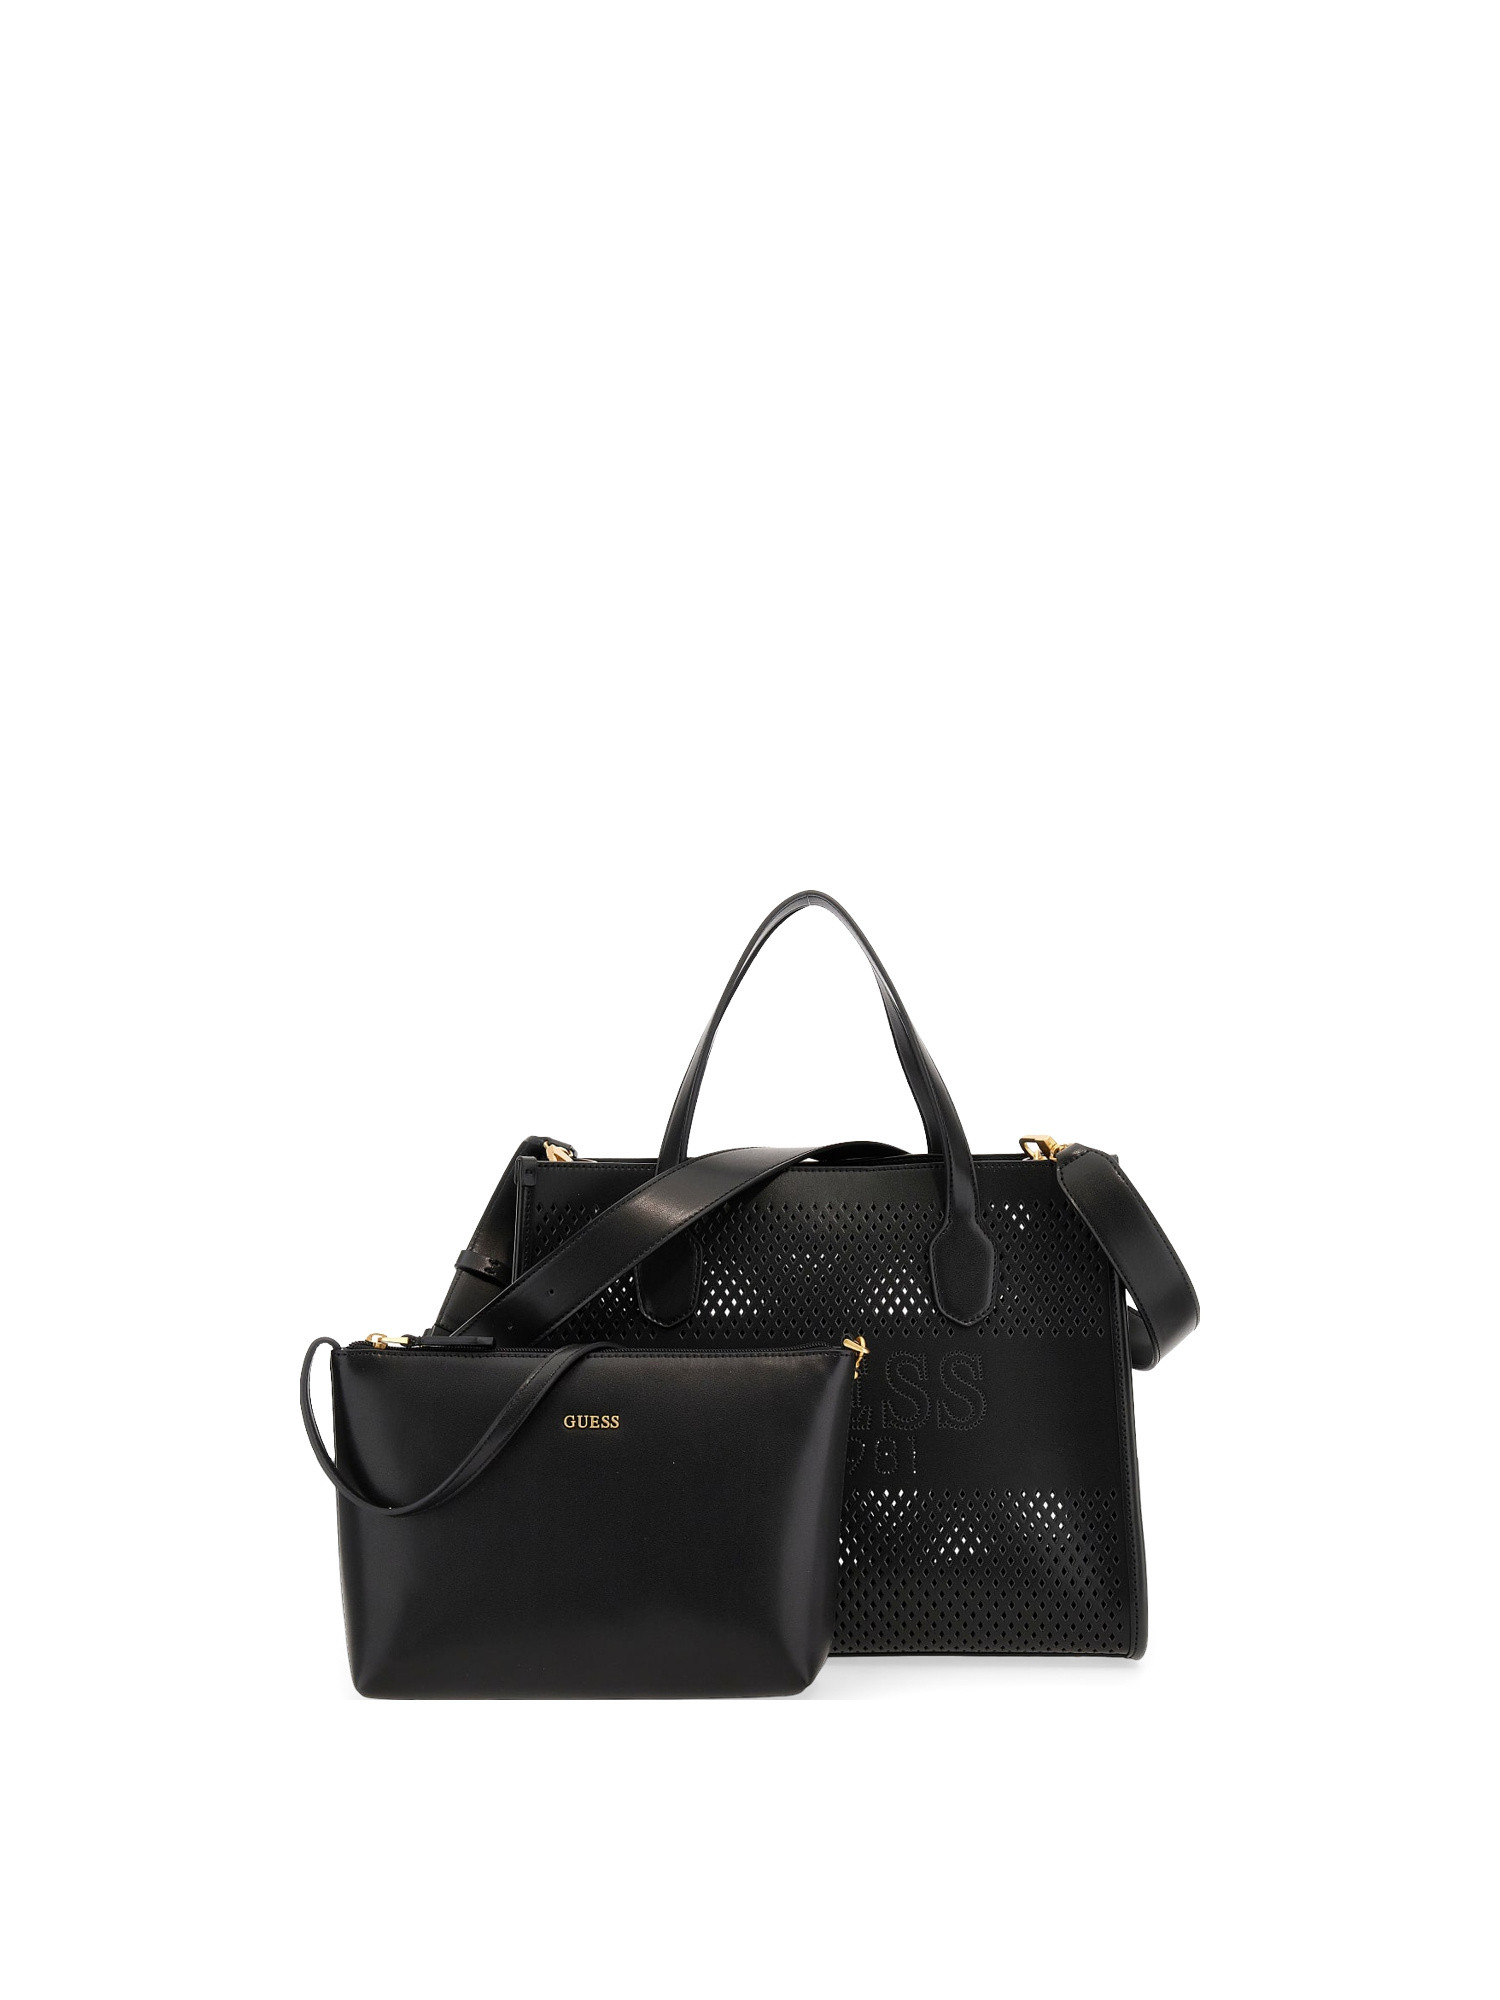 Guess - Katey perforated handbag, Black, large image number 2